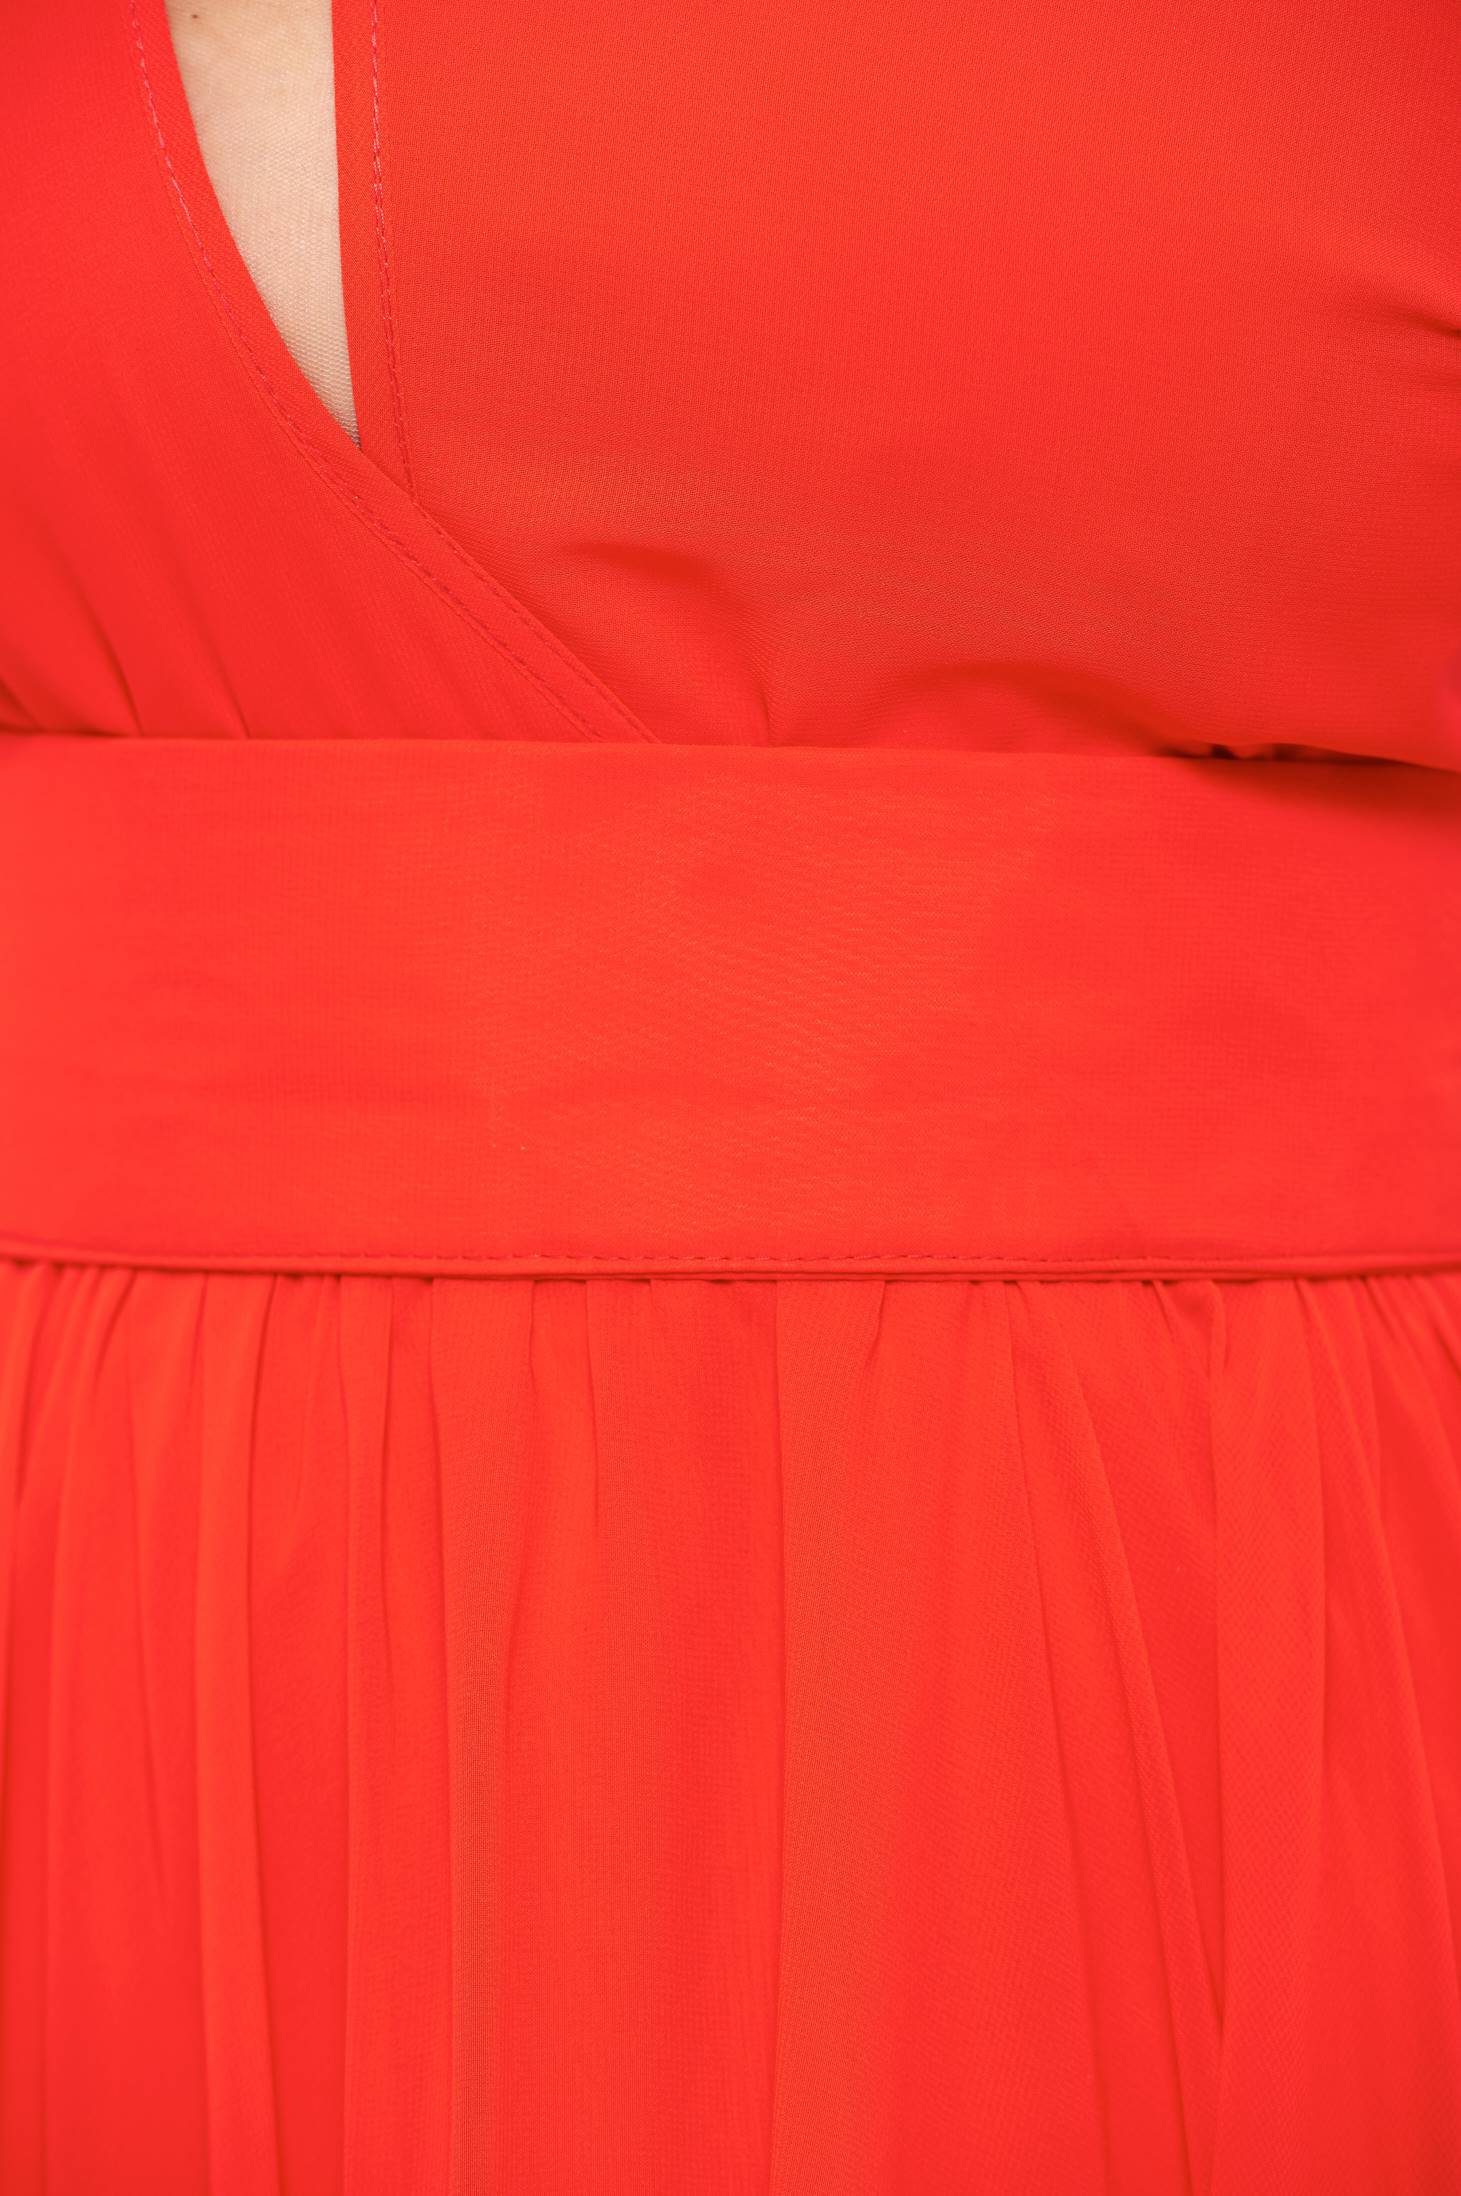 Ana Radu Charming Red Dress